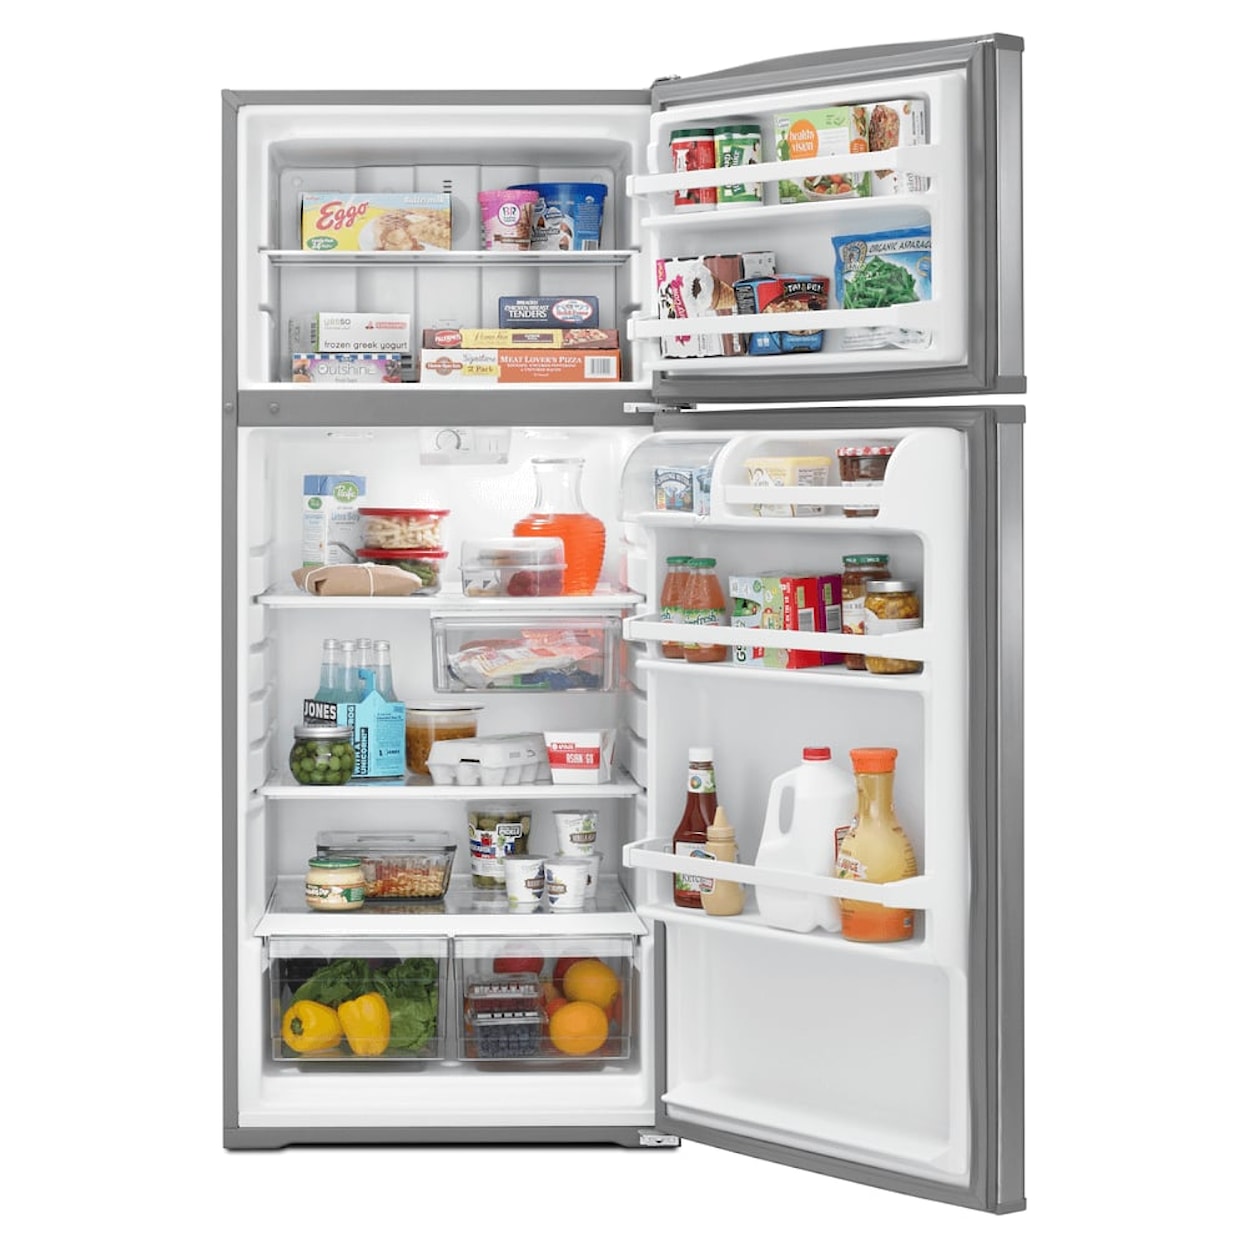 Whirlpool Refrigerators Top Freezer Freestanding Refrigerator